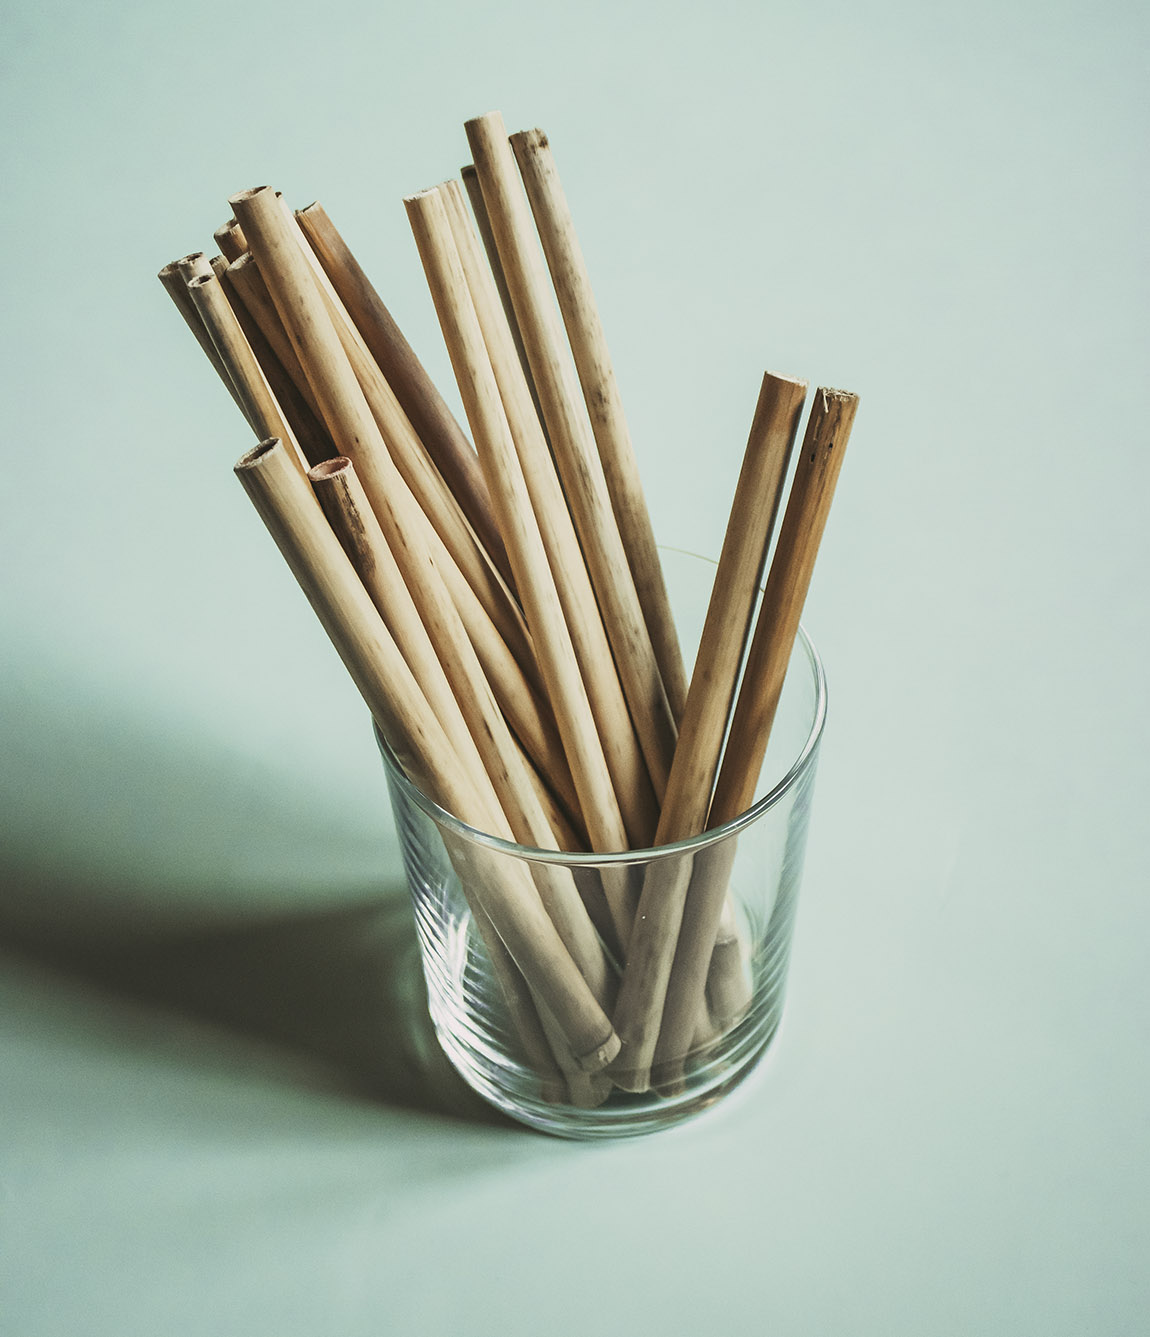 Raws: Radically beige straws made from Swedish reed